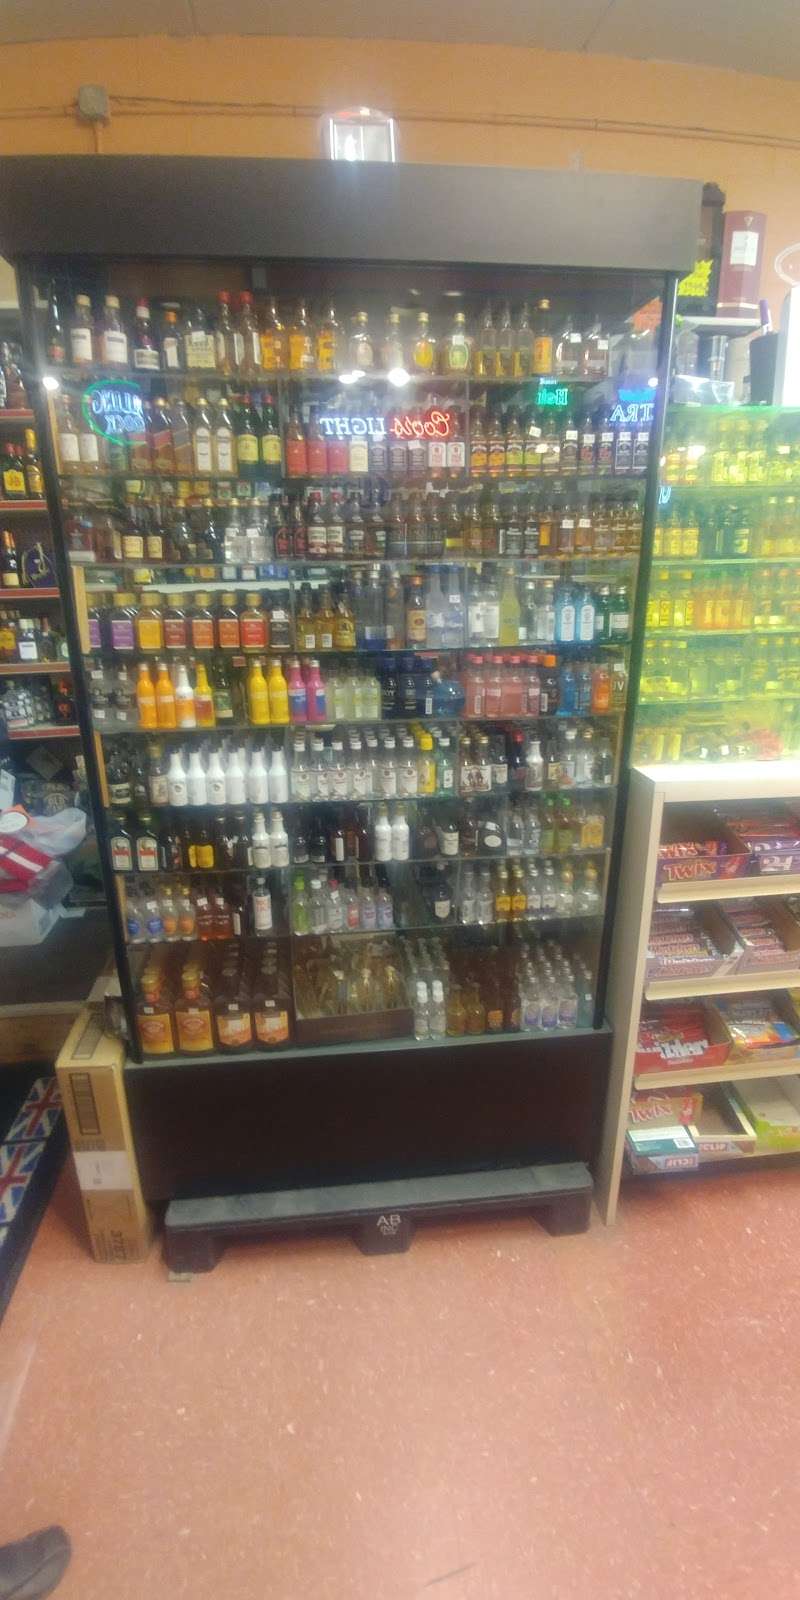 Boston Road Market Liquors | 871 Boston Rd, Groton, MA 01450, USA | Phone: (978) 448-2628